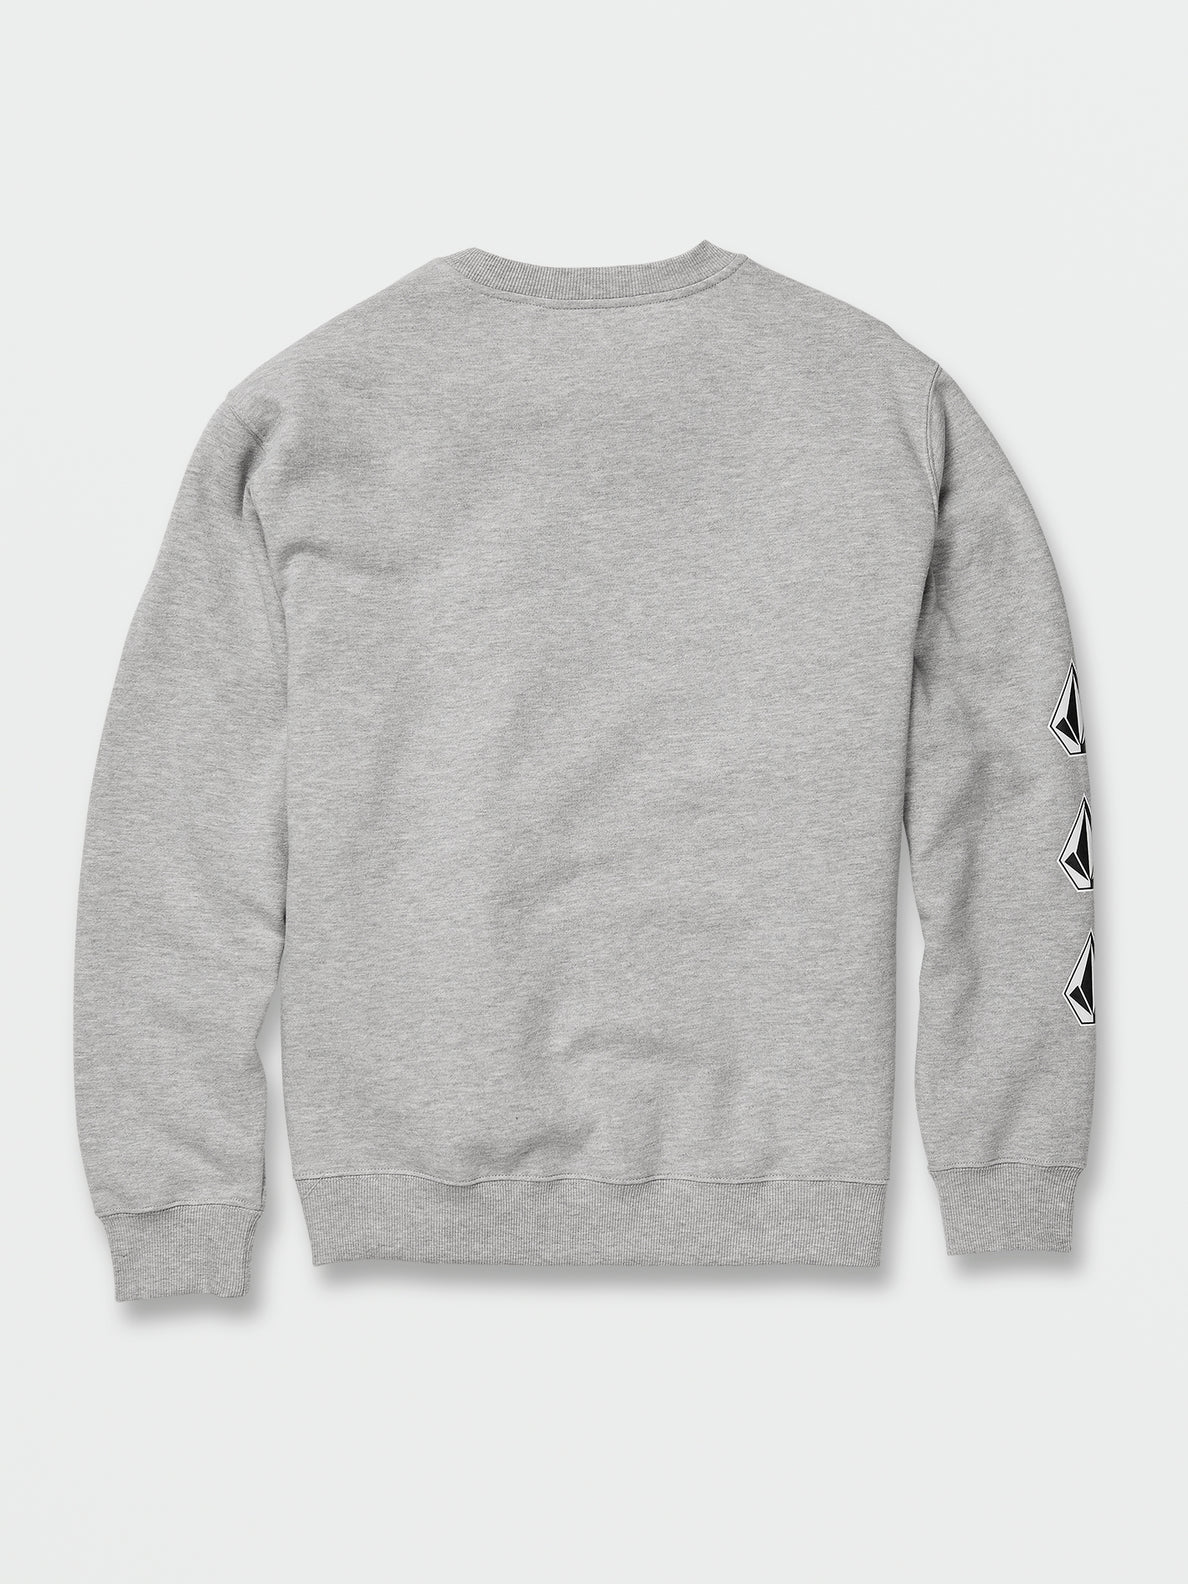 Iconic Stone Crew Sweatshirt - Heather Grey (A4642200_HGR) [B]